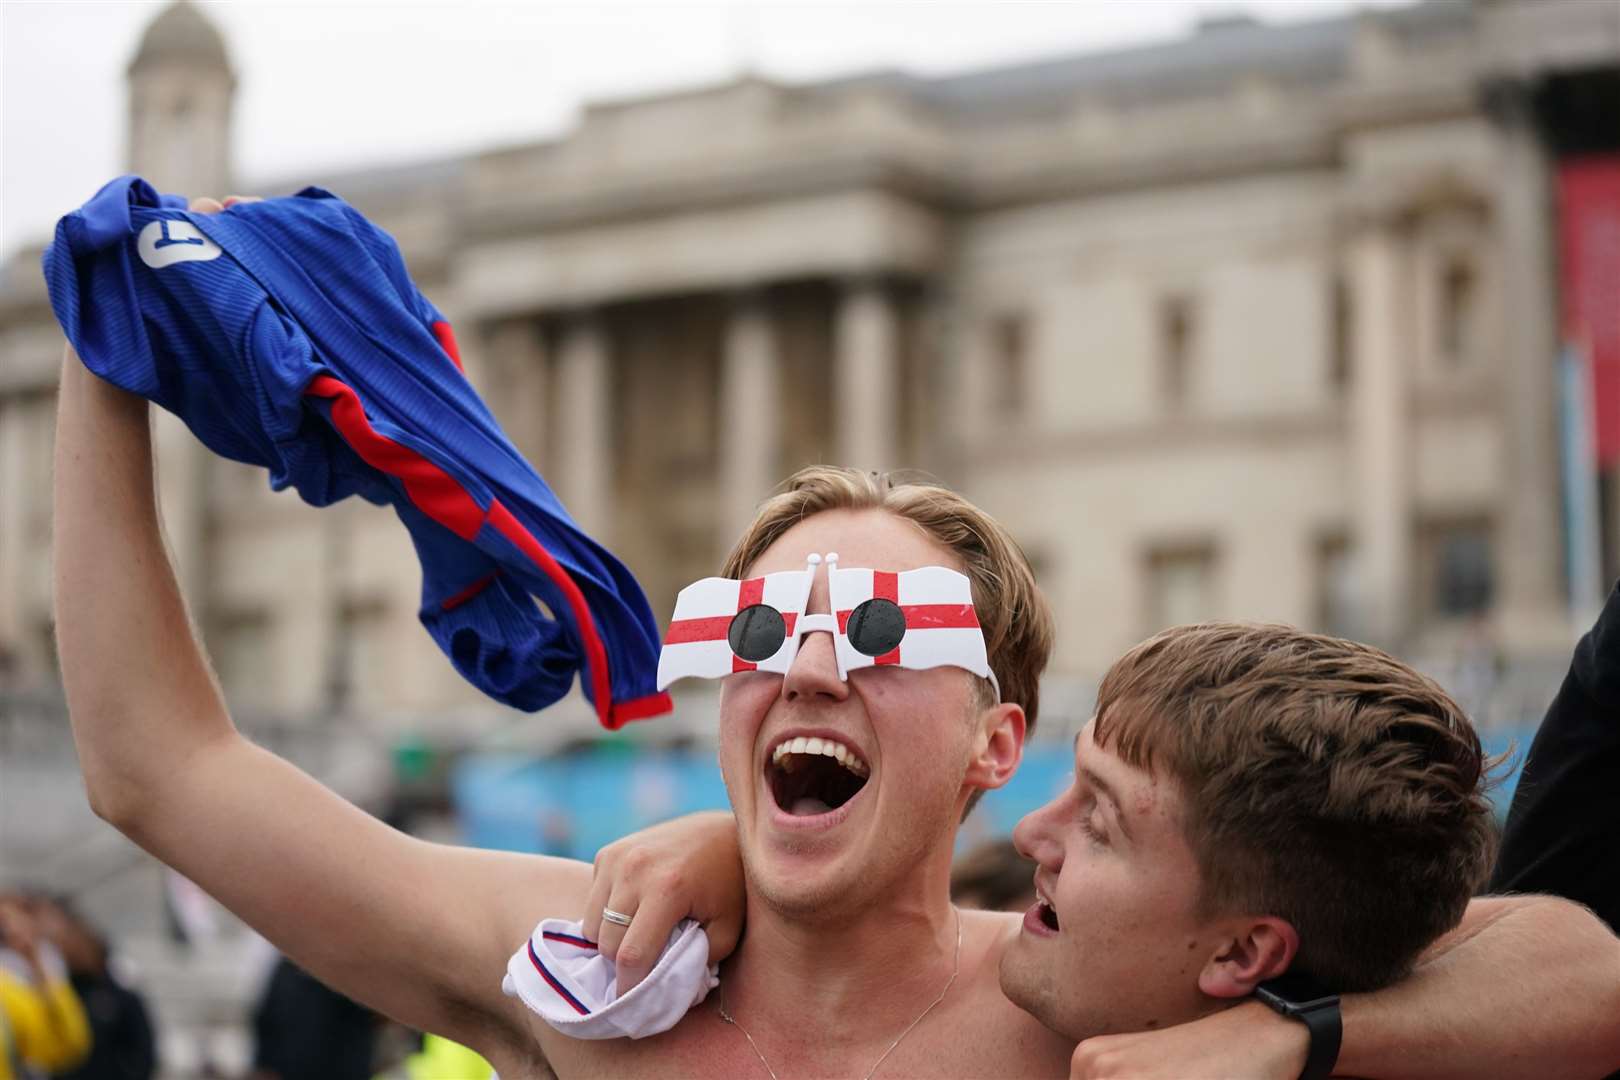 Celebrating in Trafalgar Square as Harry Kane scored the second England goal (Victoria Jones/PA)